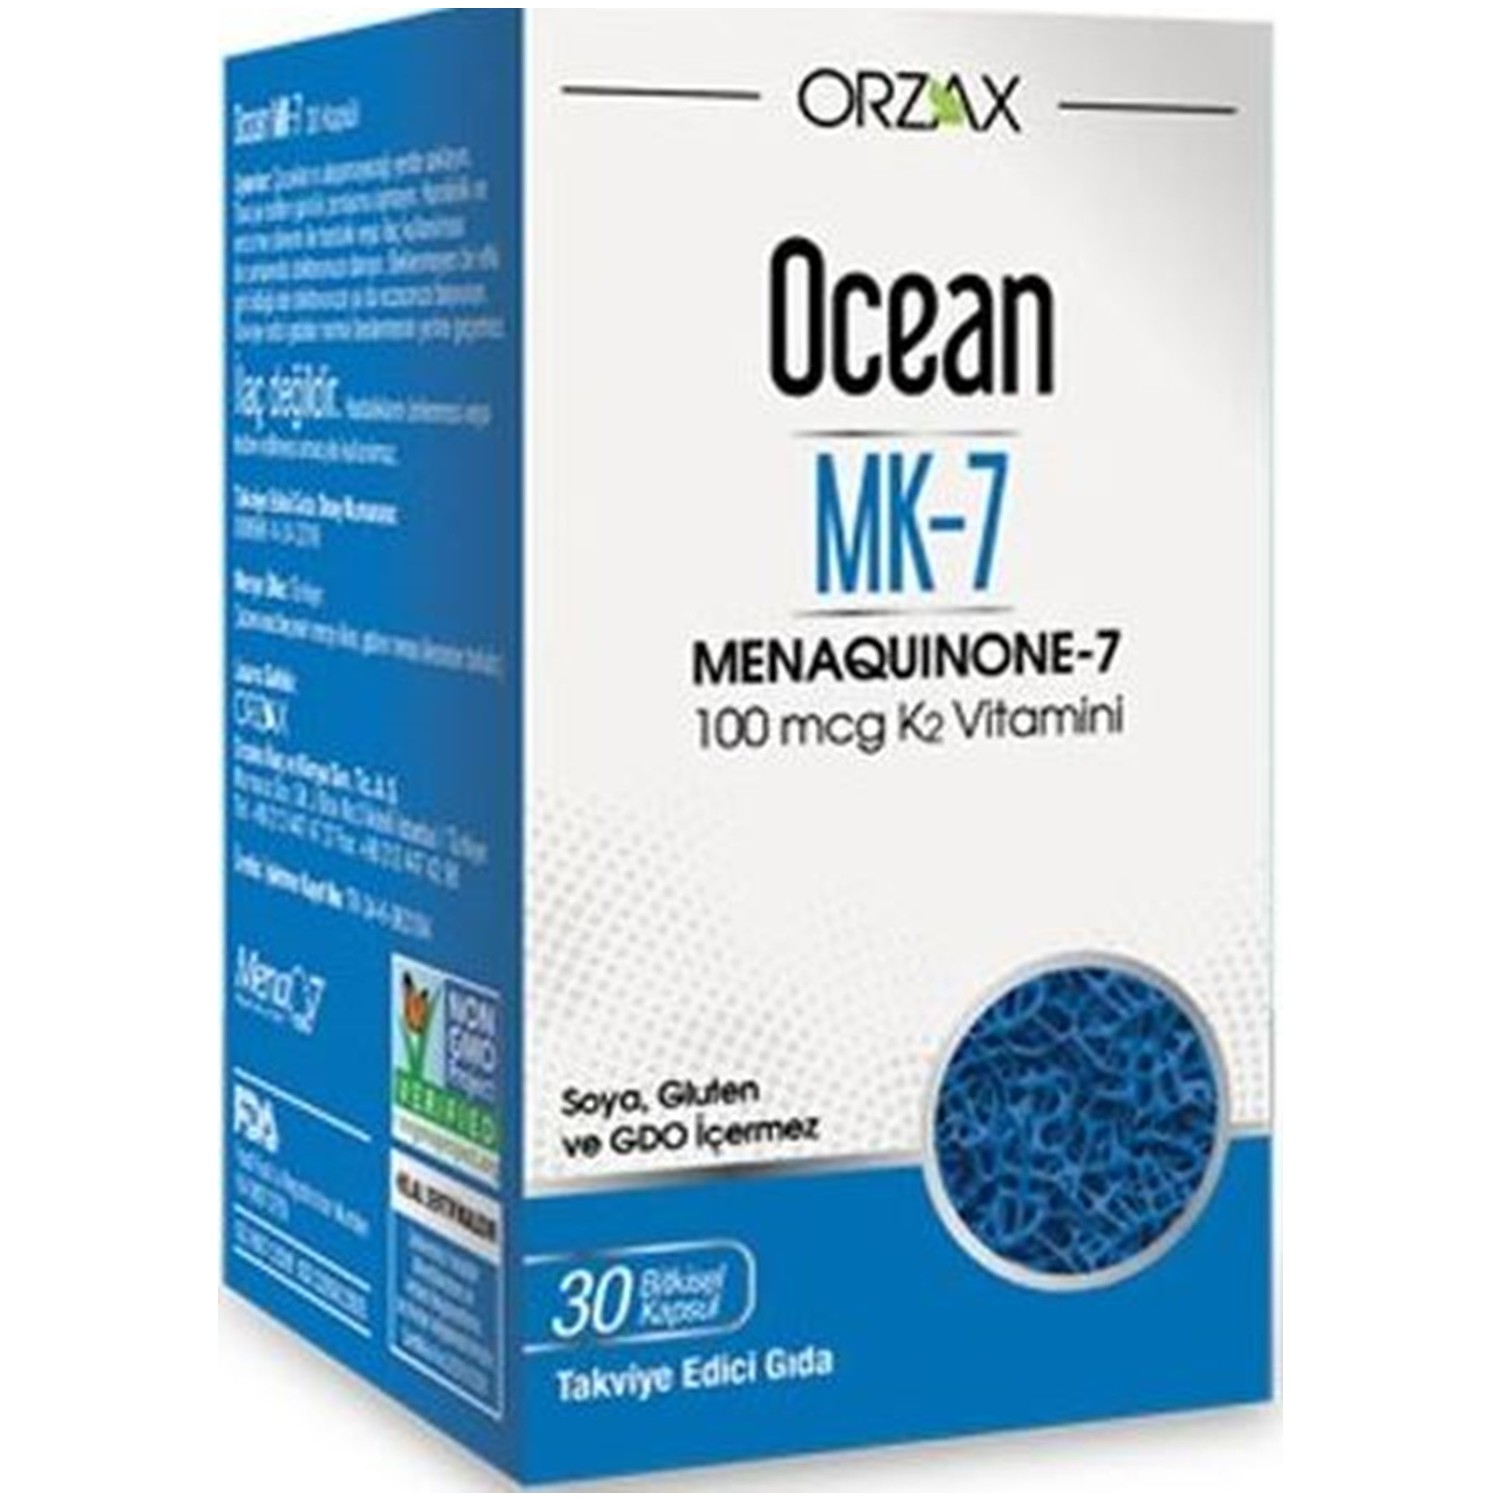 Пищевая добавка Orzax Ocean Mk-7 Vitamin К2 100 мкг, 30 капсул jarrow formulas mk 7 самая активная форма витамина k2 180 мкг 60 мягких таблеток